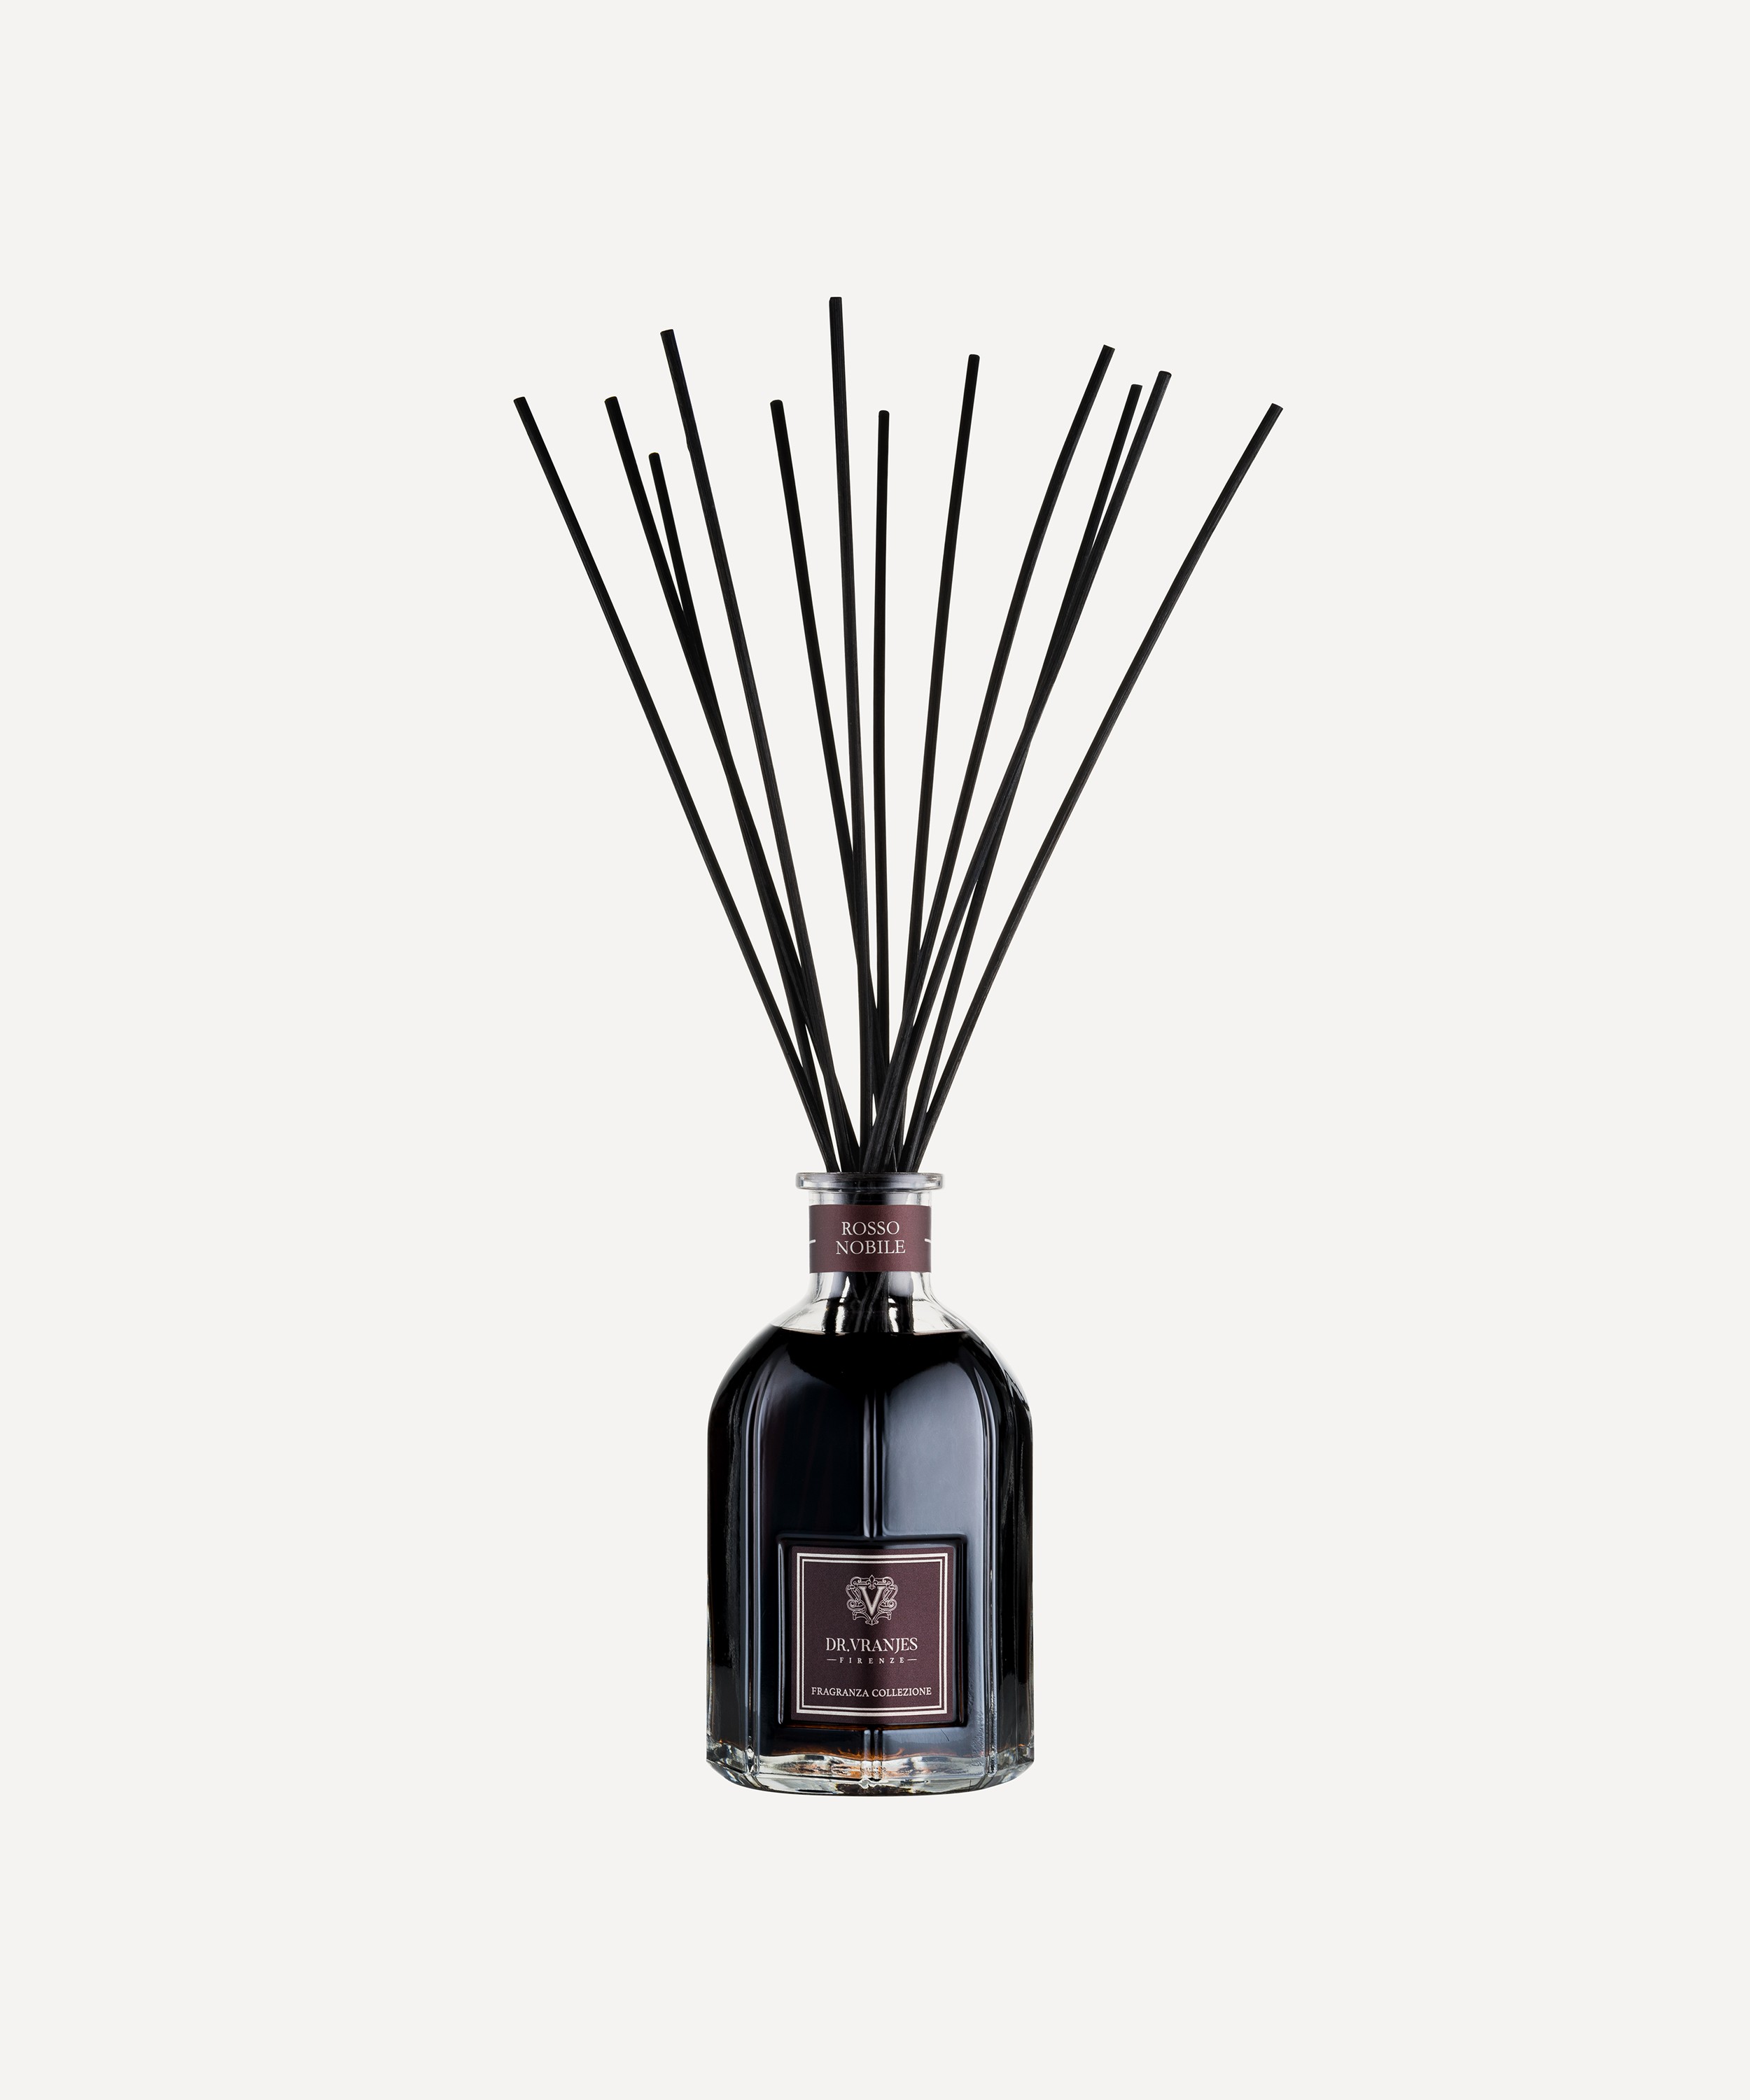 Dr Vranjes Firenze Rosso Nobile Fragrance Diffuser 500ml | Liberty